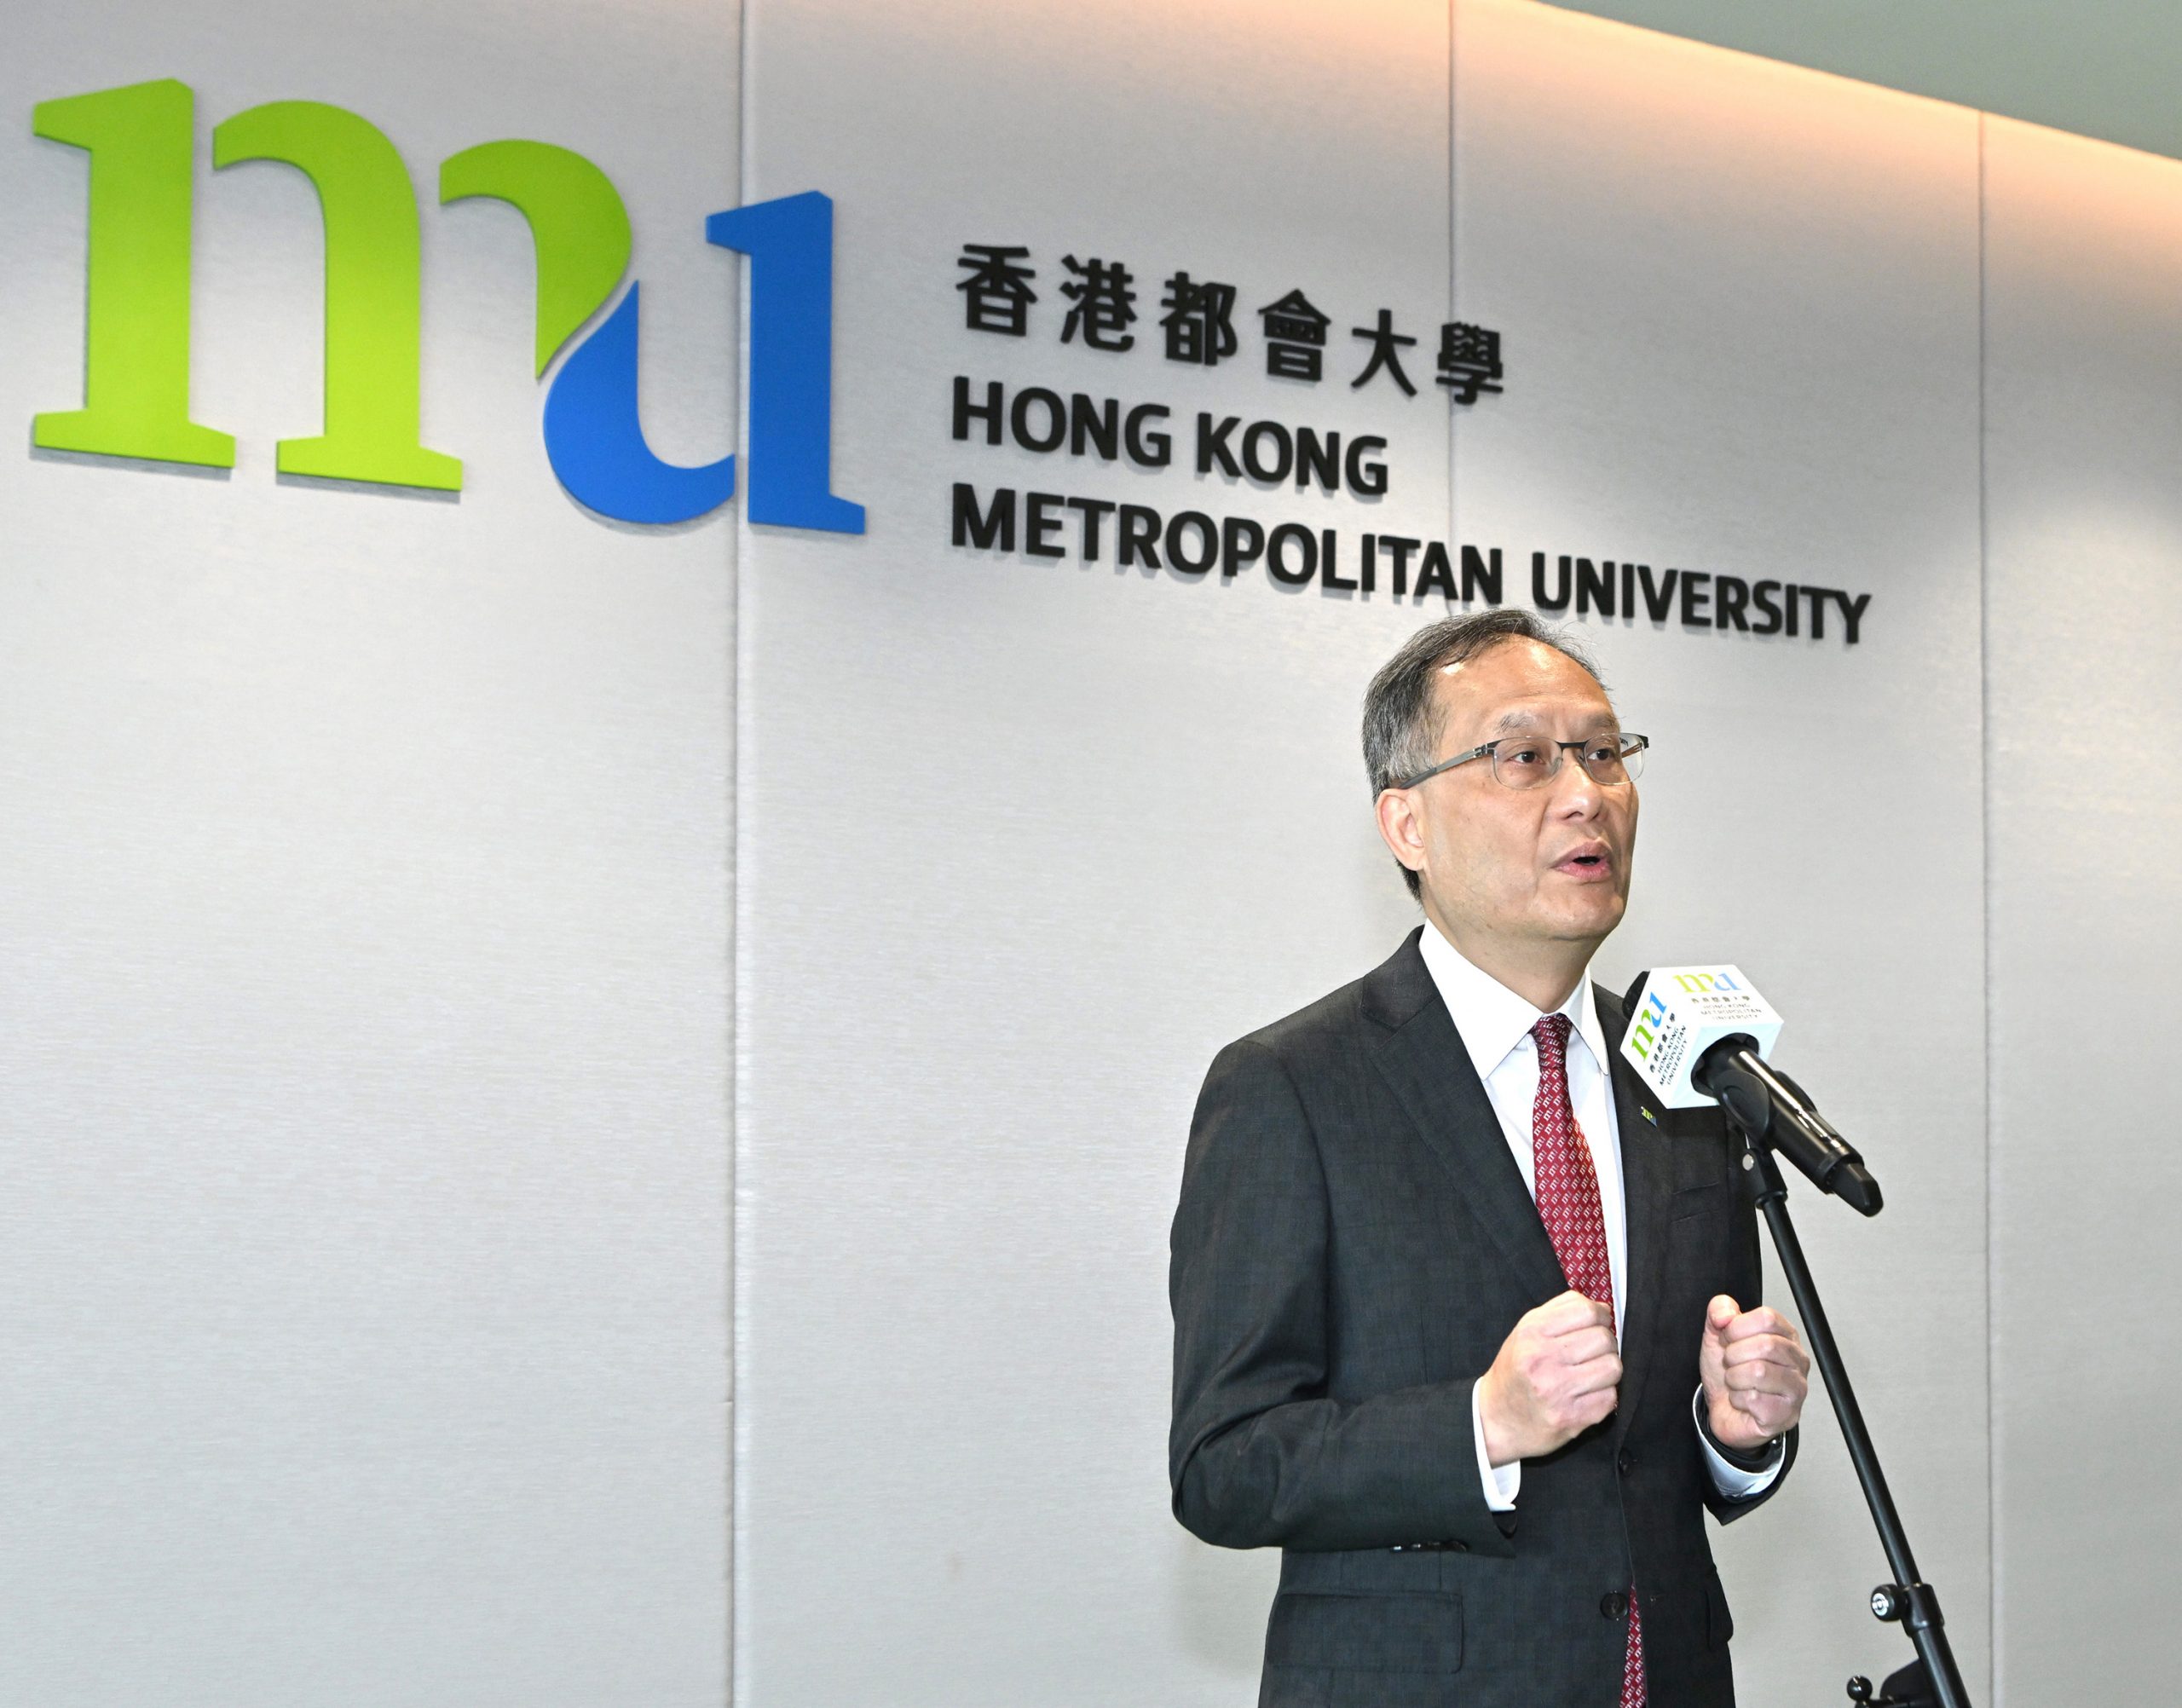 Prof. Lam shares the latest development of HKMU